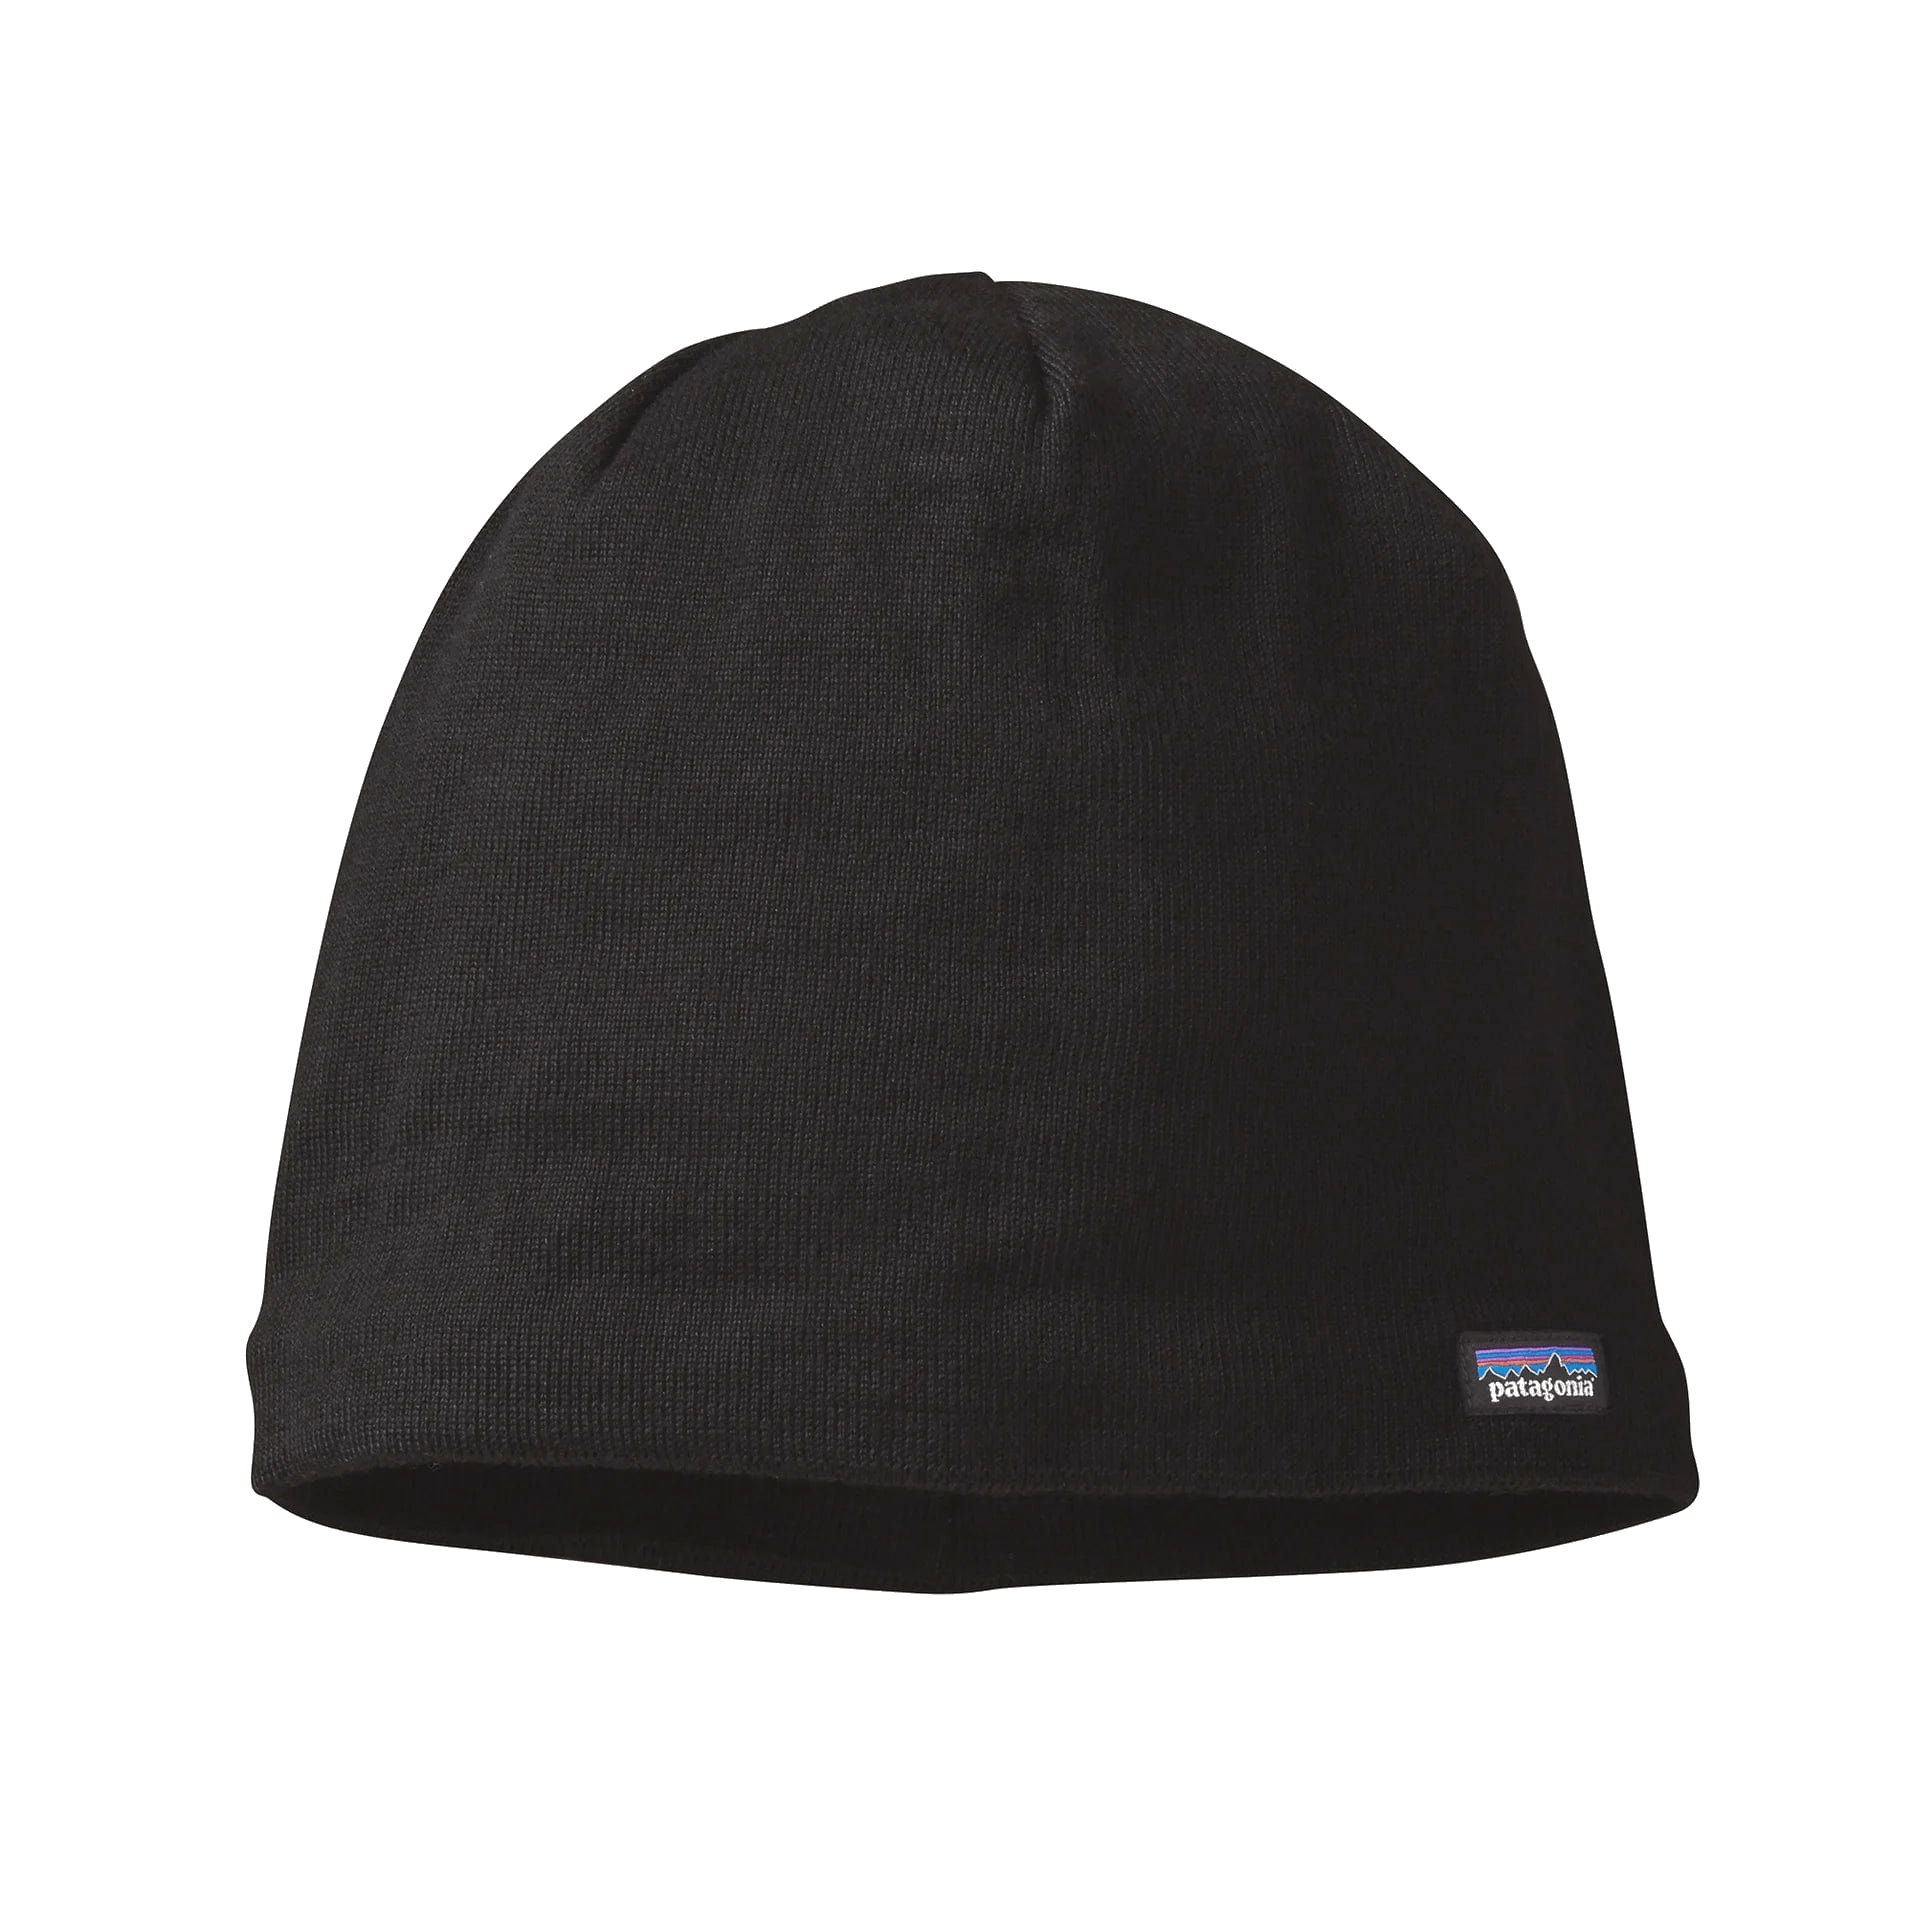 Patagonia Headwear One Size / Black Patagonia - Beanie Hat